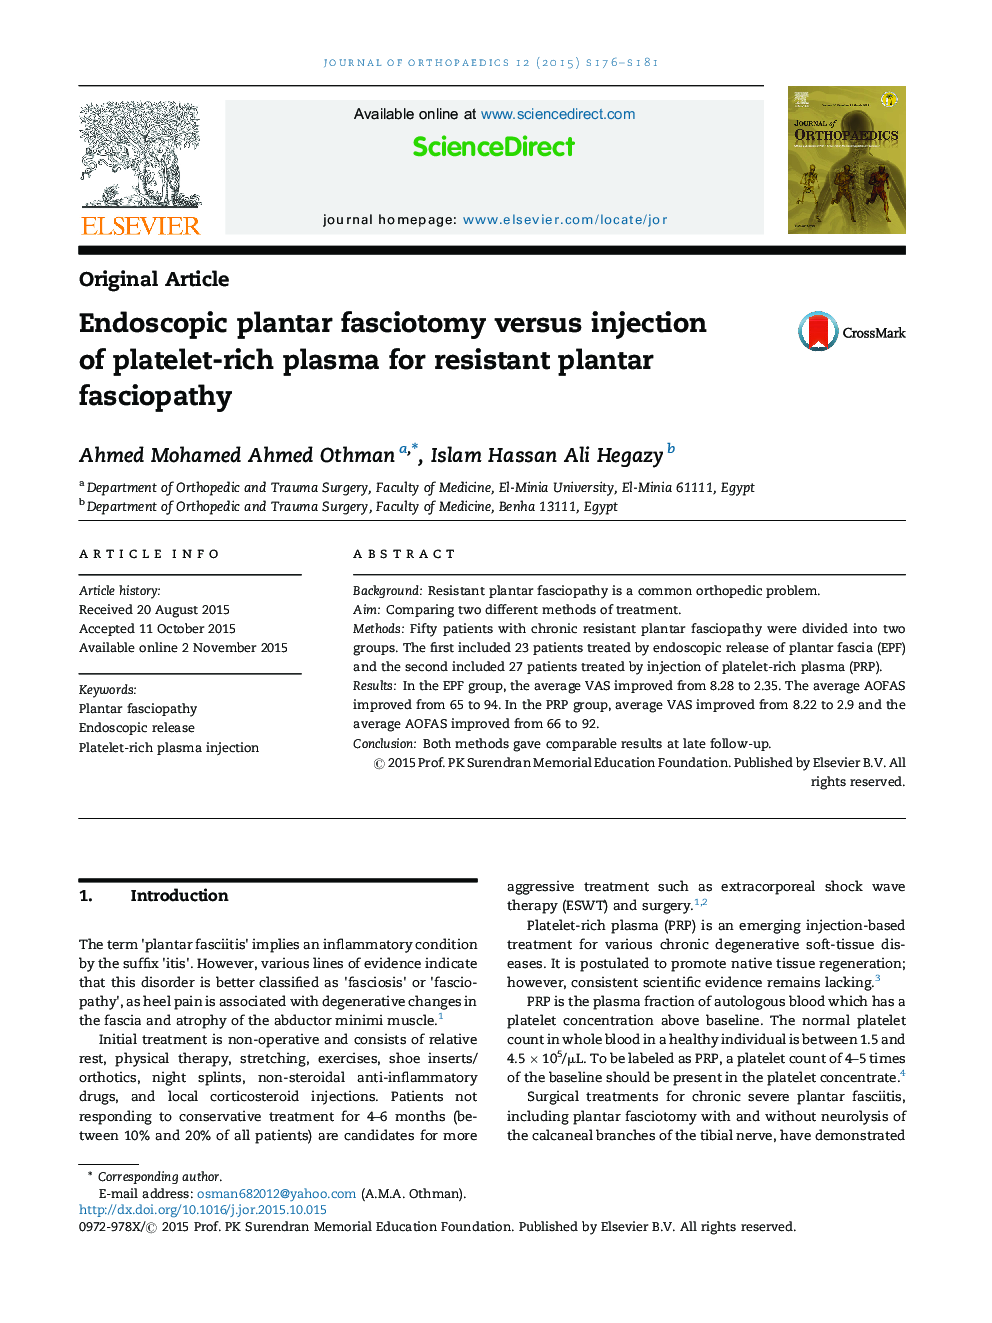 Endoscopic plantar fasciotomy versus injection of platelet-rich plasma for resistant plantar fasciopathy